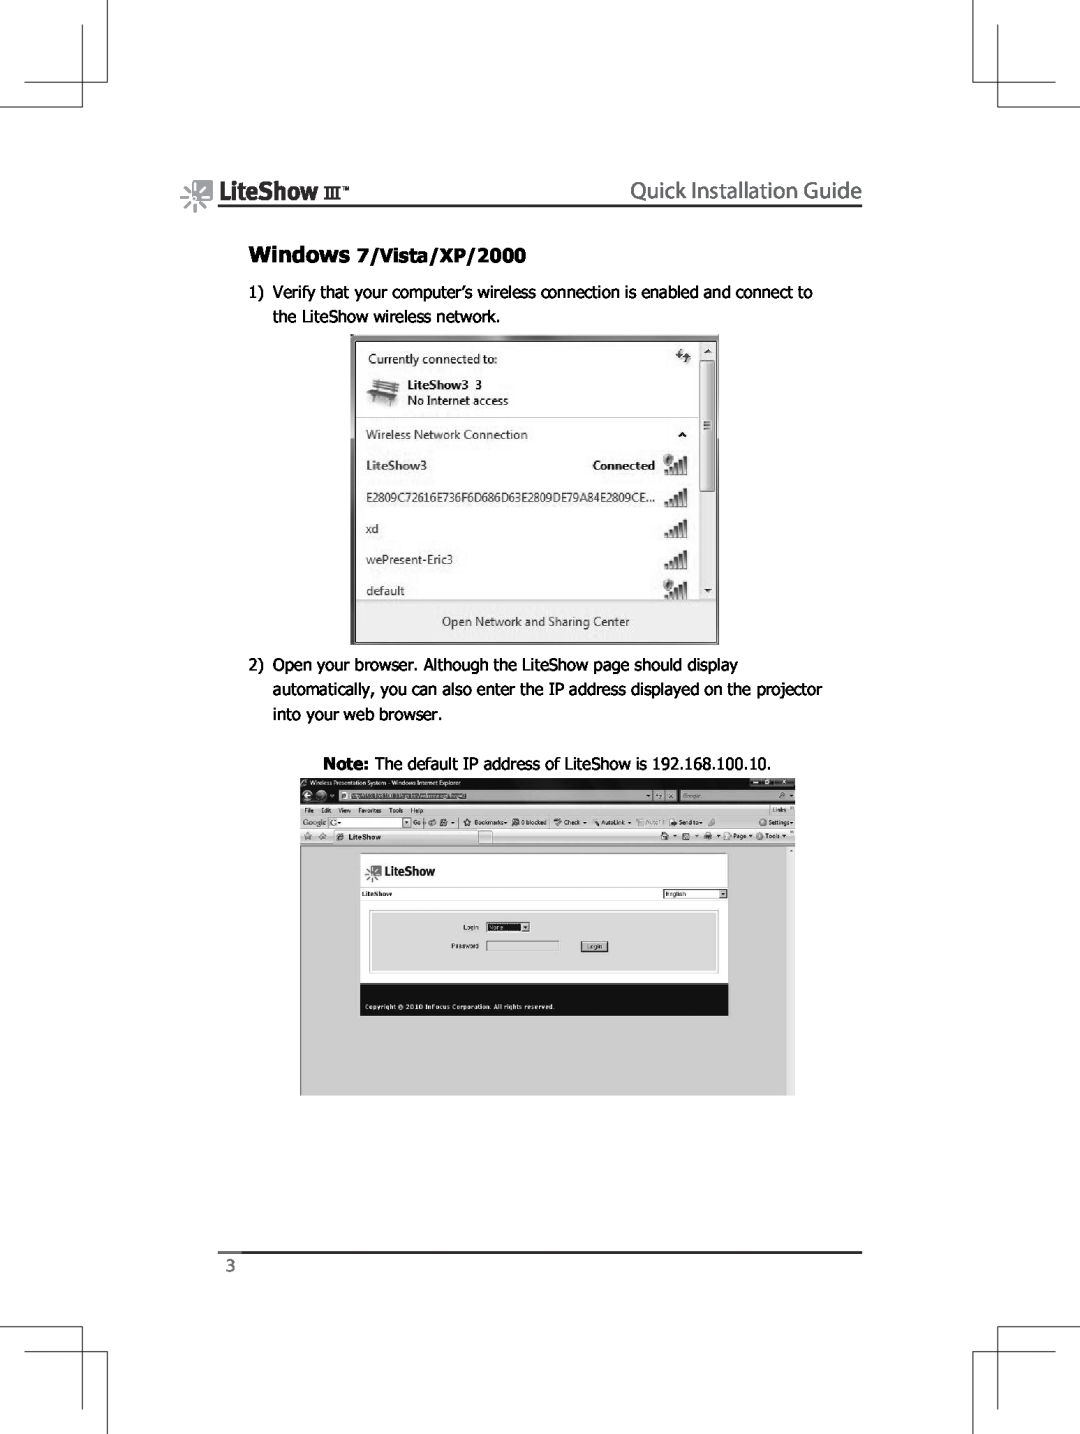 InFocus INLITESHOW3 manual Quick Installation Guide, Windows 7/Vista/XP/2000 